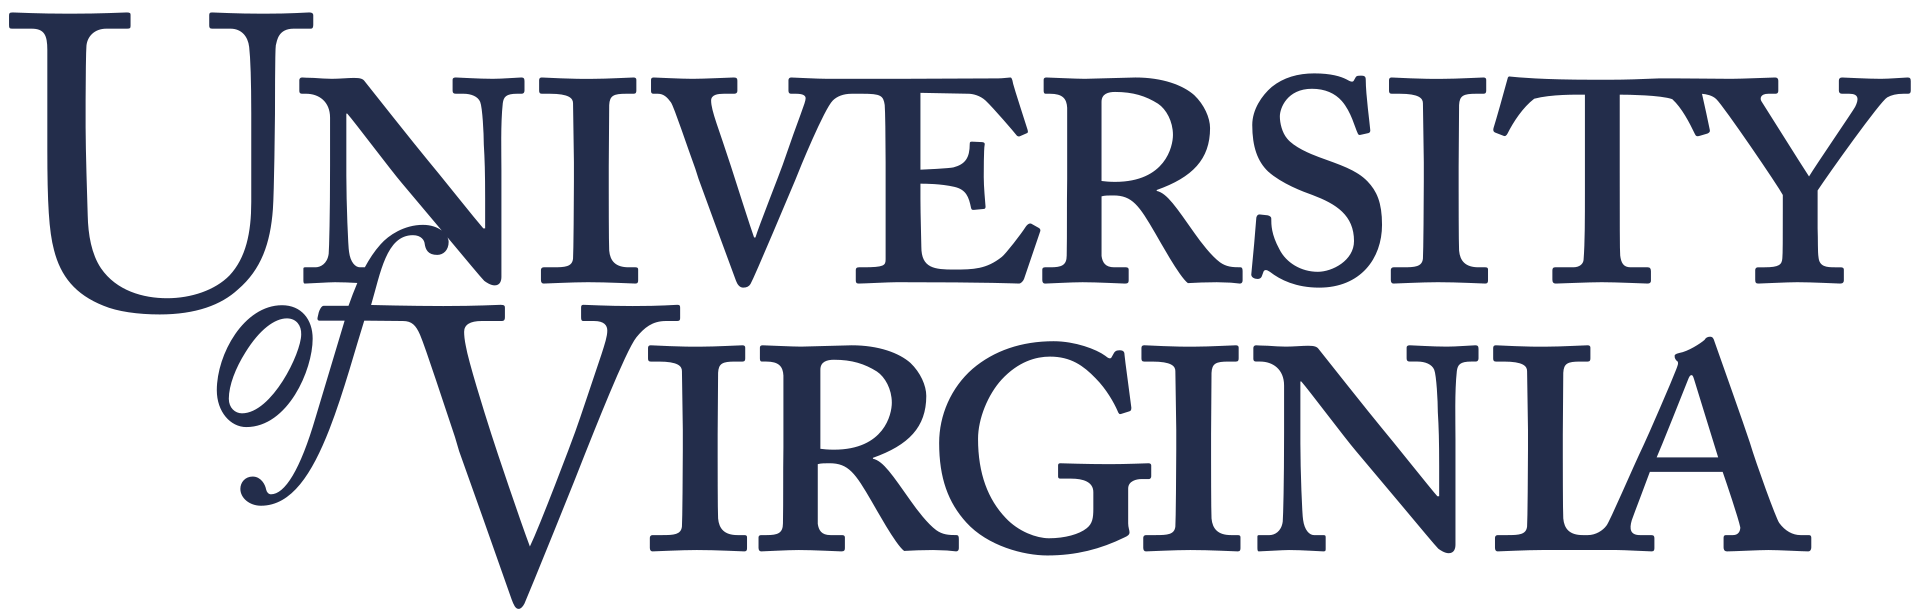 弗吉尼亚大学 logo, By 弗吉尼亚大学 - Can be obtained from U.Va.，公共领域，http://commons.维基.org/w/index.php?curid = 18657033 "